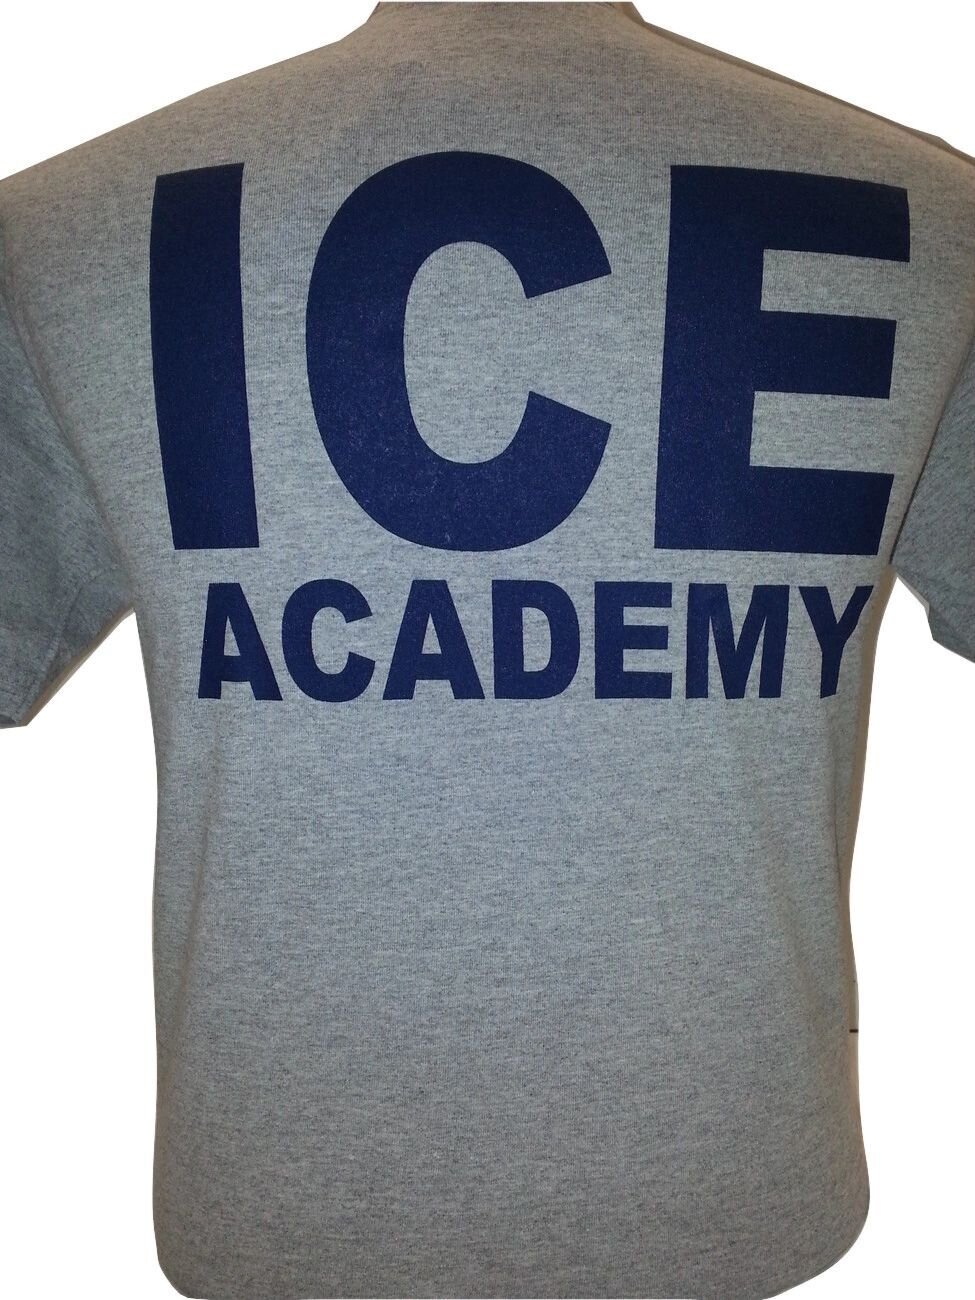 ICE Academy T-Shirt